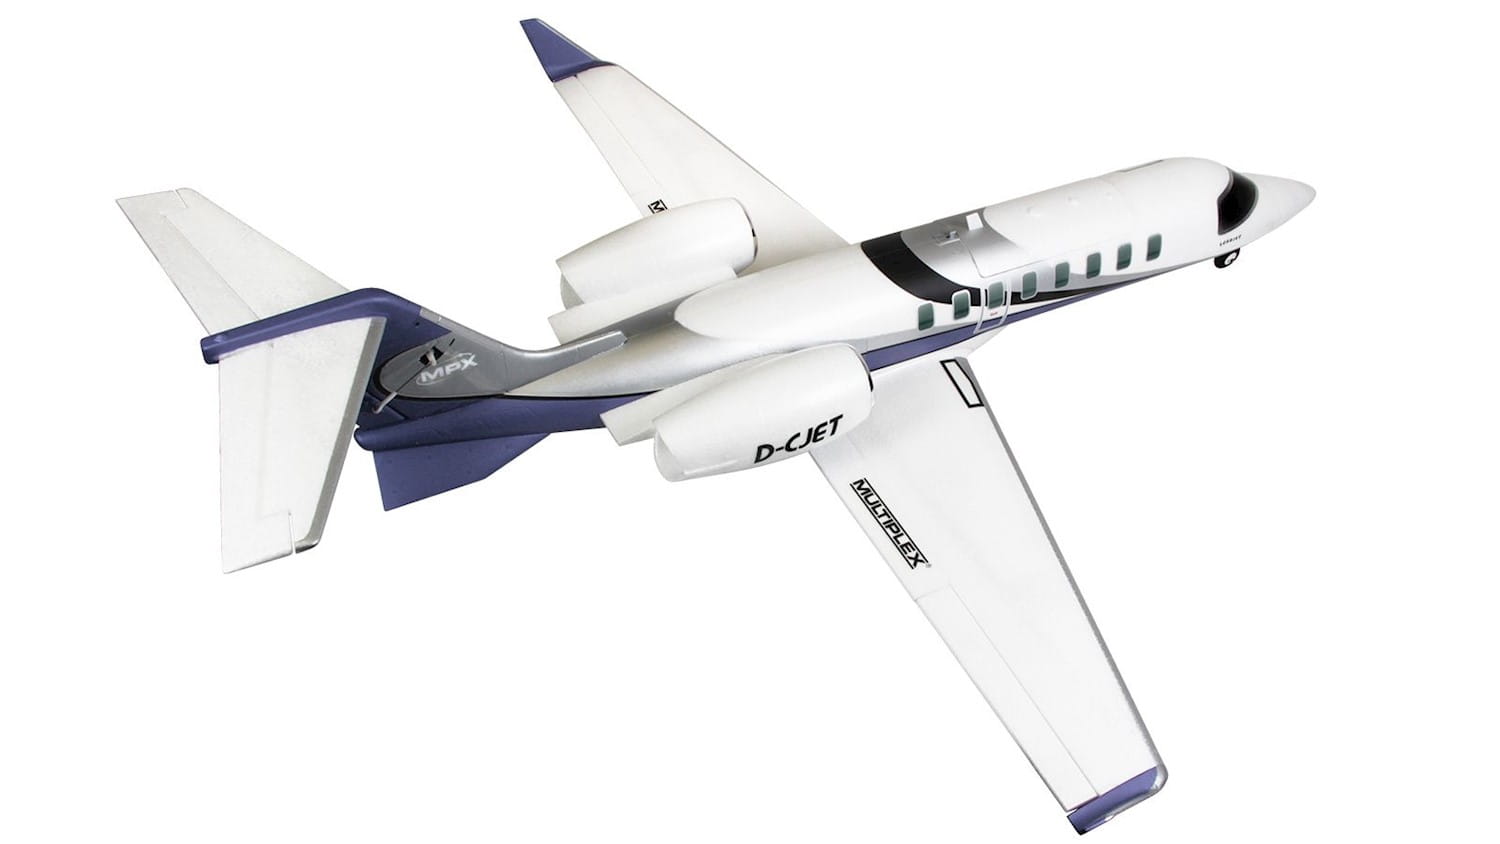 Multiplex RR Learjet RC Flugzeug